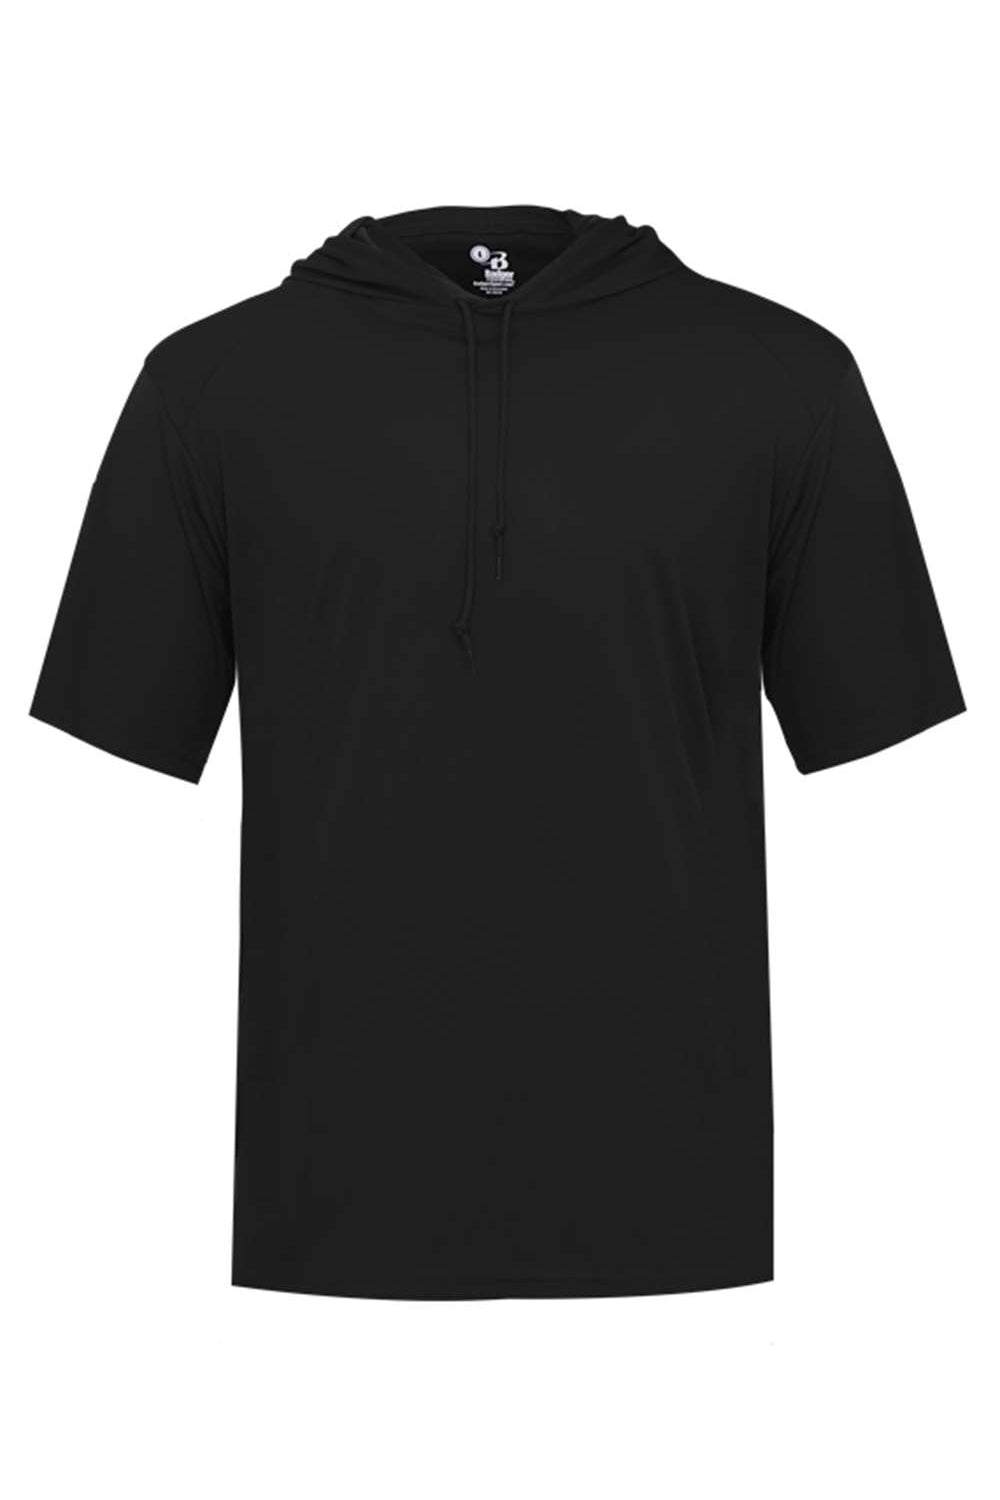 Badger 4123 Mens B-Core Moisture Wicking Hooded T-Shirt Hoodie Black Flat Front